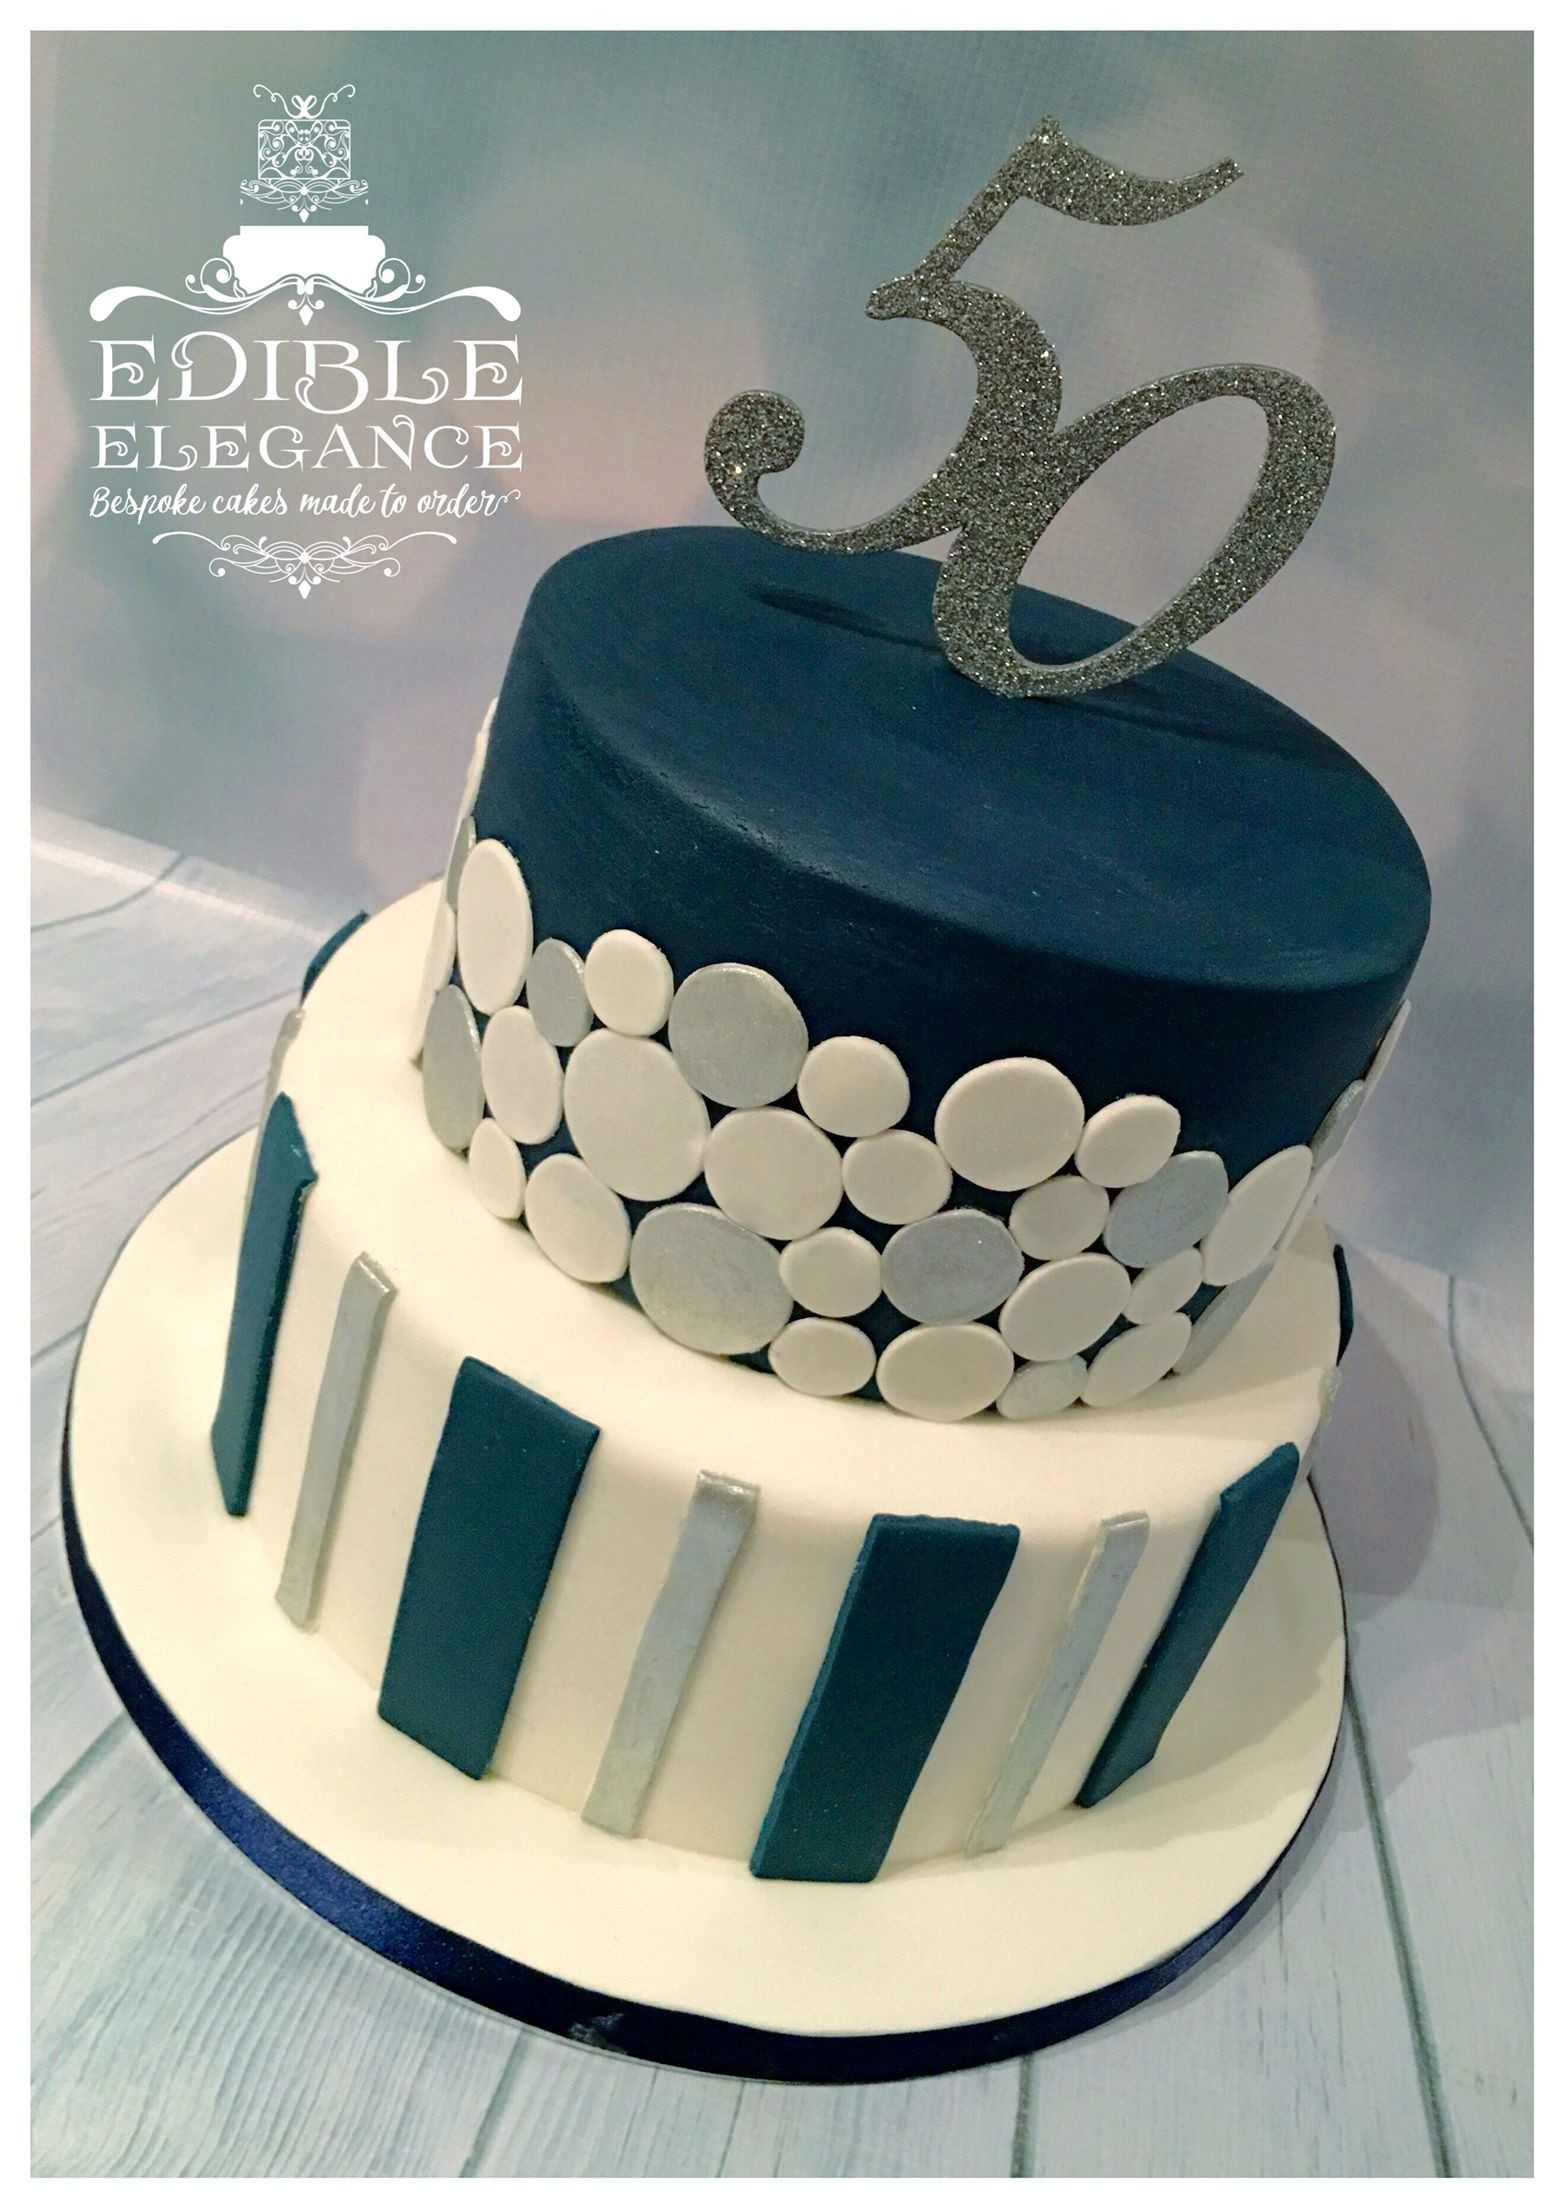 50th Birthday Cake Decorating Ideas
 50th birthday cake contemporary design in masculine blue